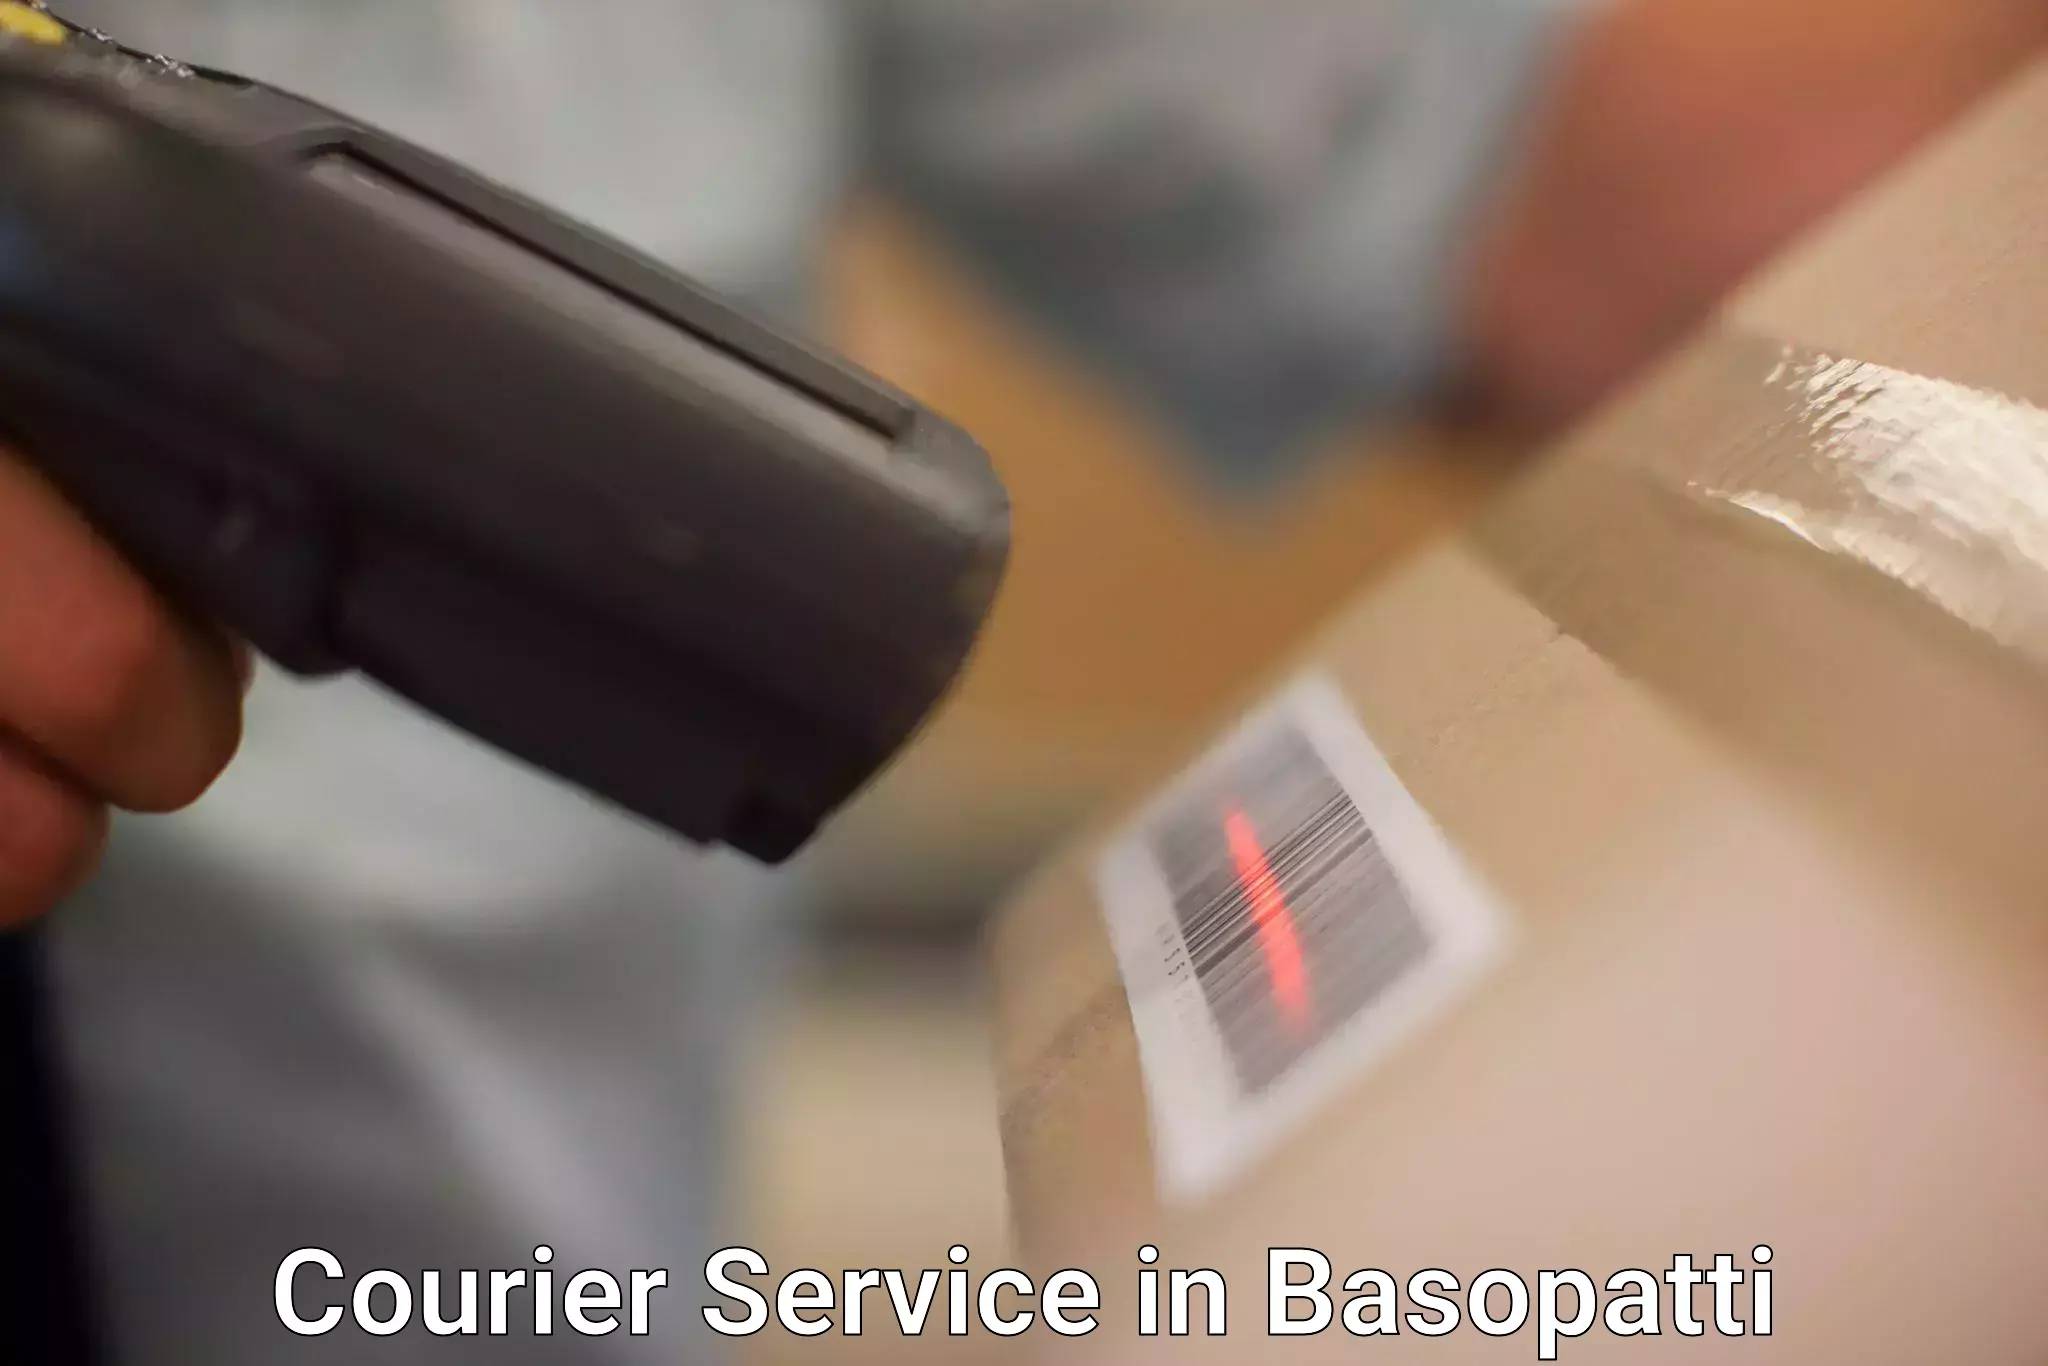 Specialized shipment handling in Basopatti